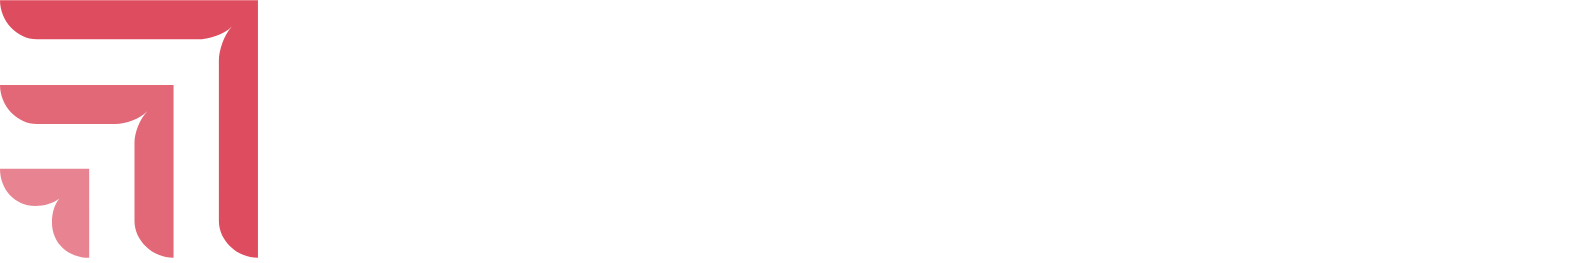 Phoenix Group logo large for dark backgrounds (transparent PNG)